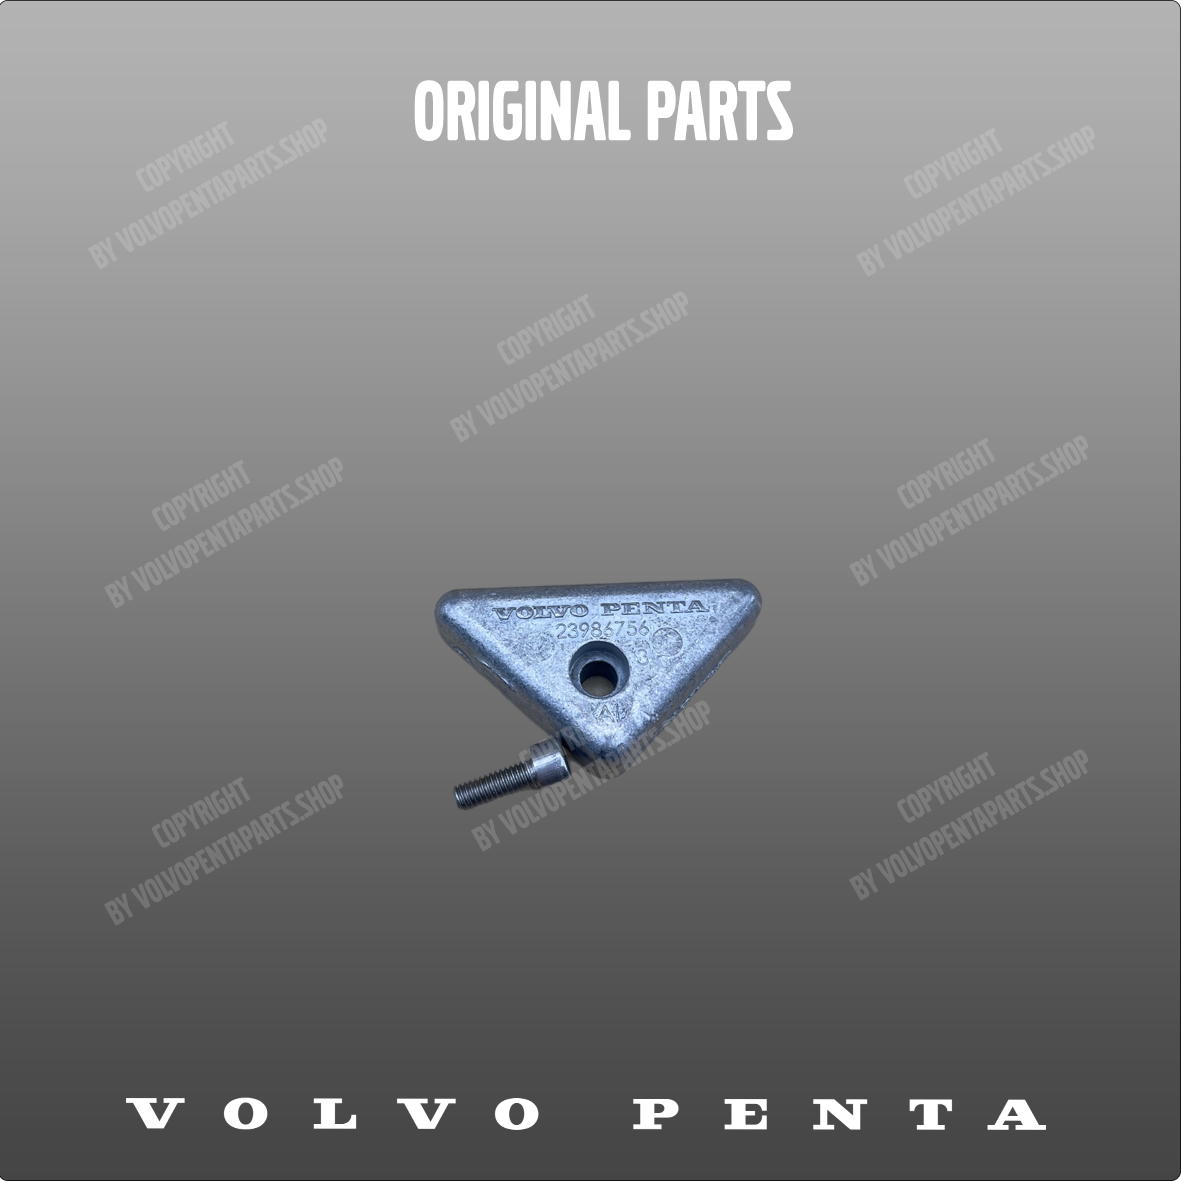 Volvo Penta anode kit 23986753